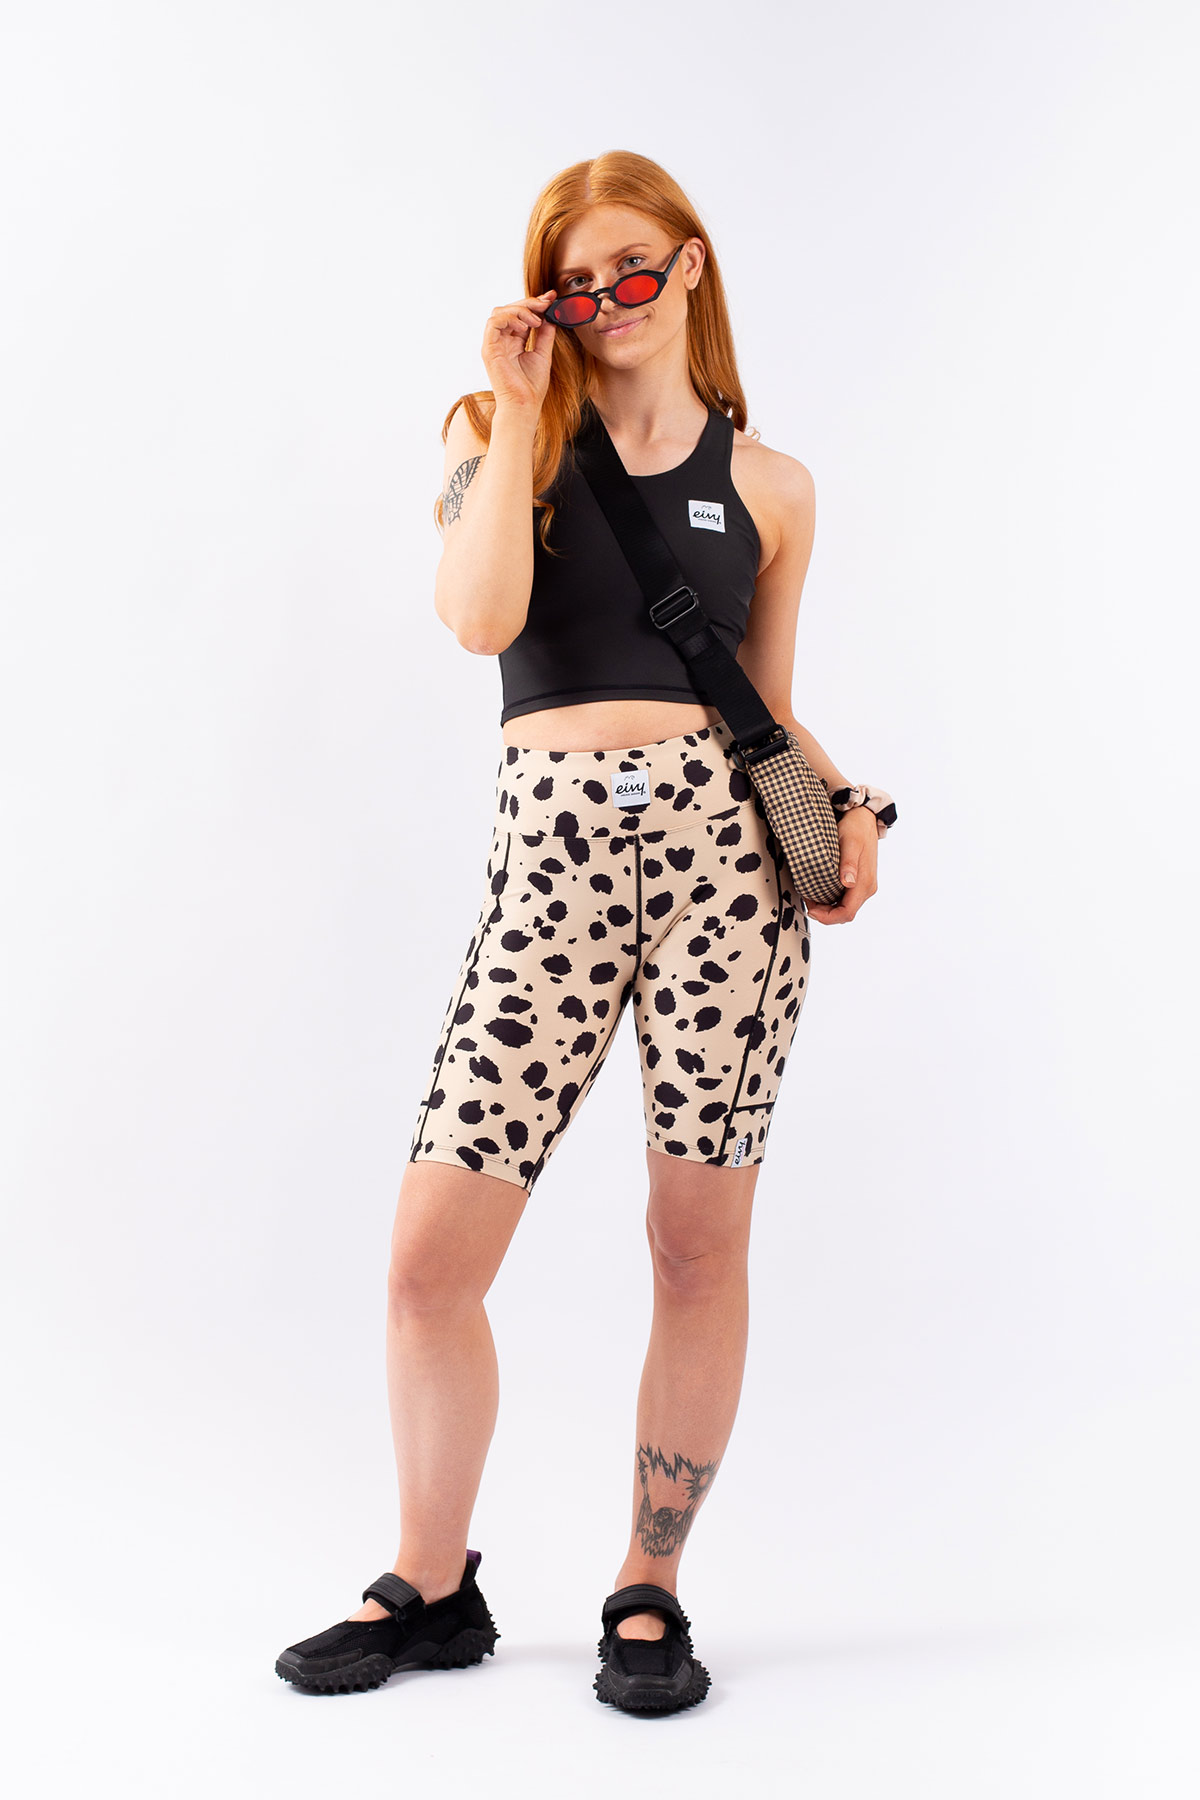 Venture Biker Shorts - Cheetah | XXL